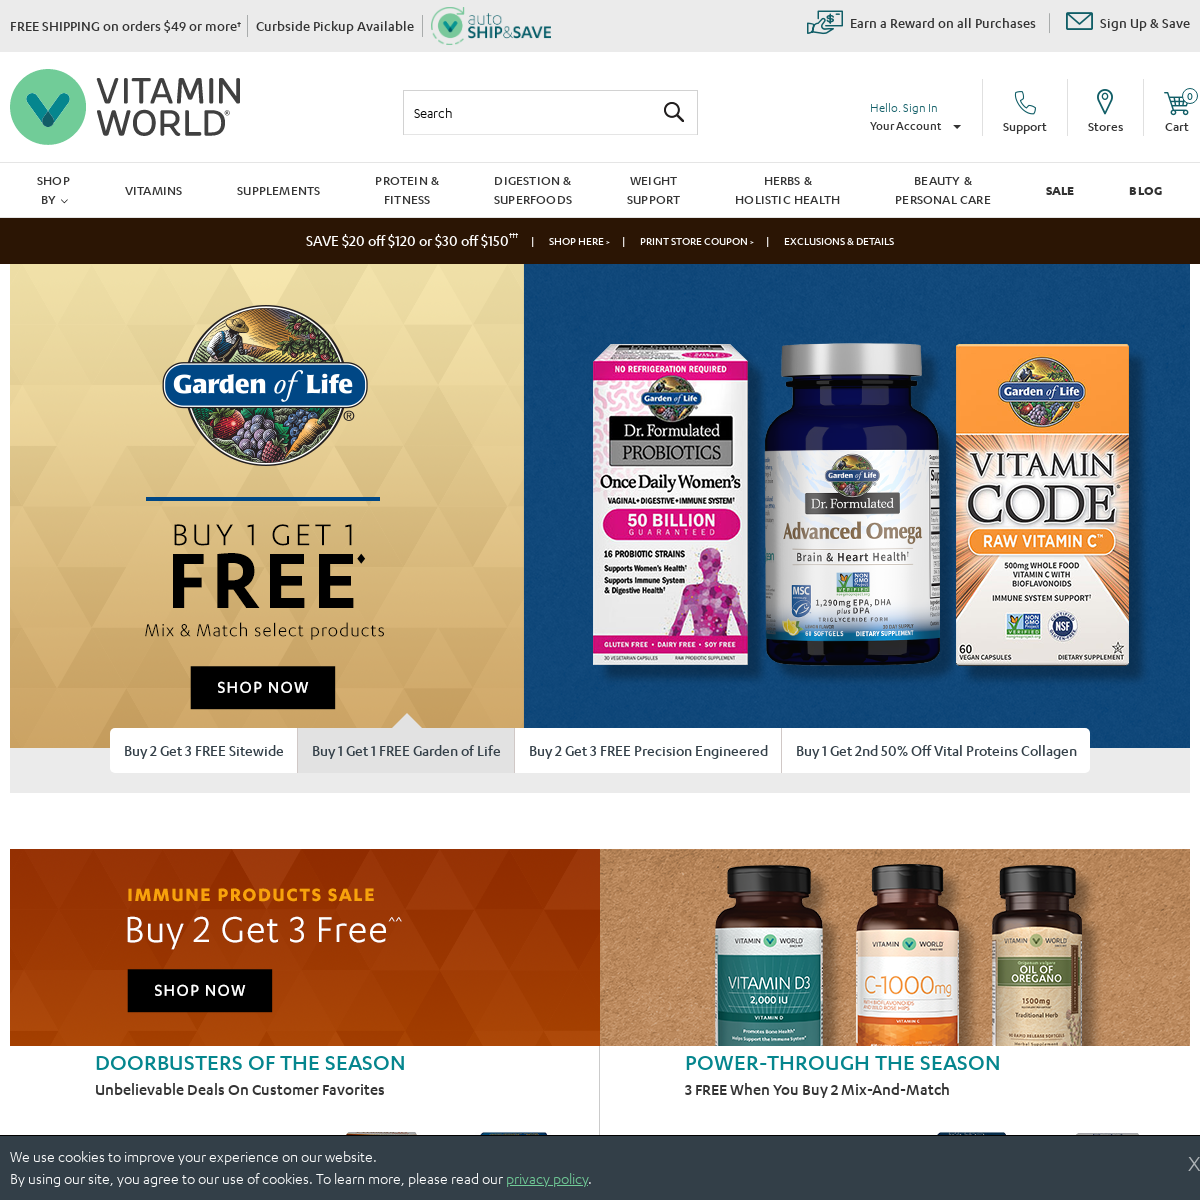 A complete backup of vitaminworld.com